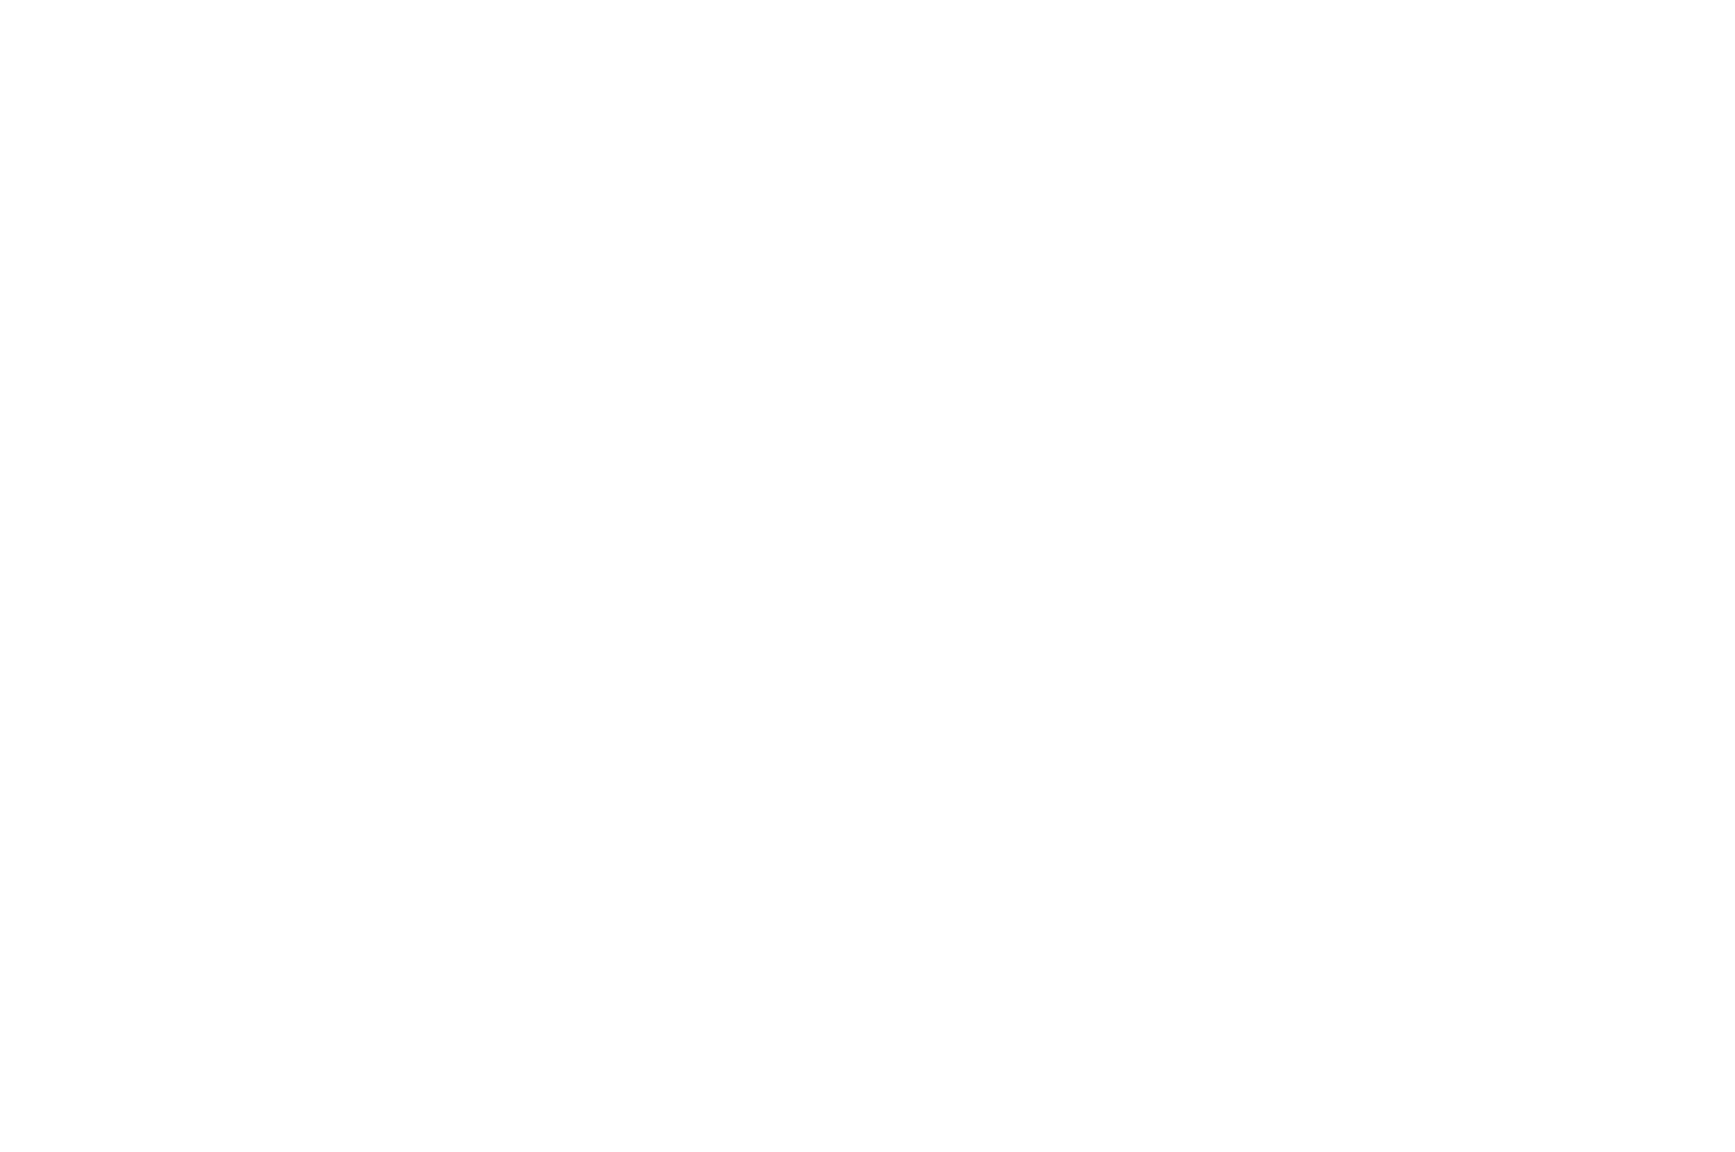 Houston Comedy Film Festival